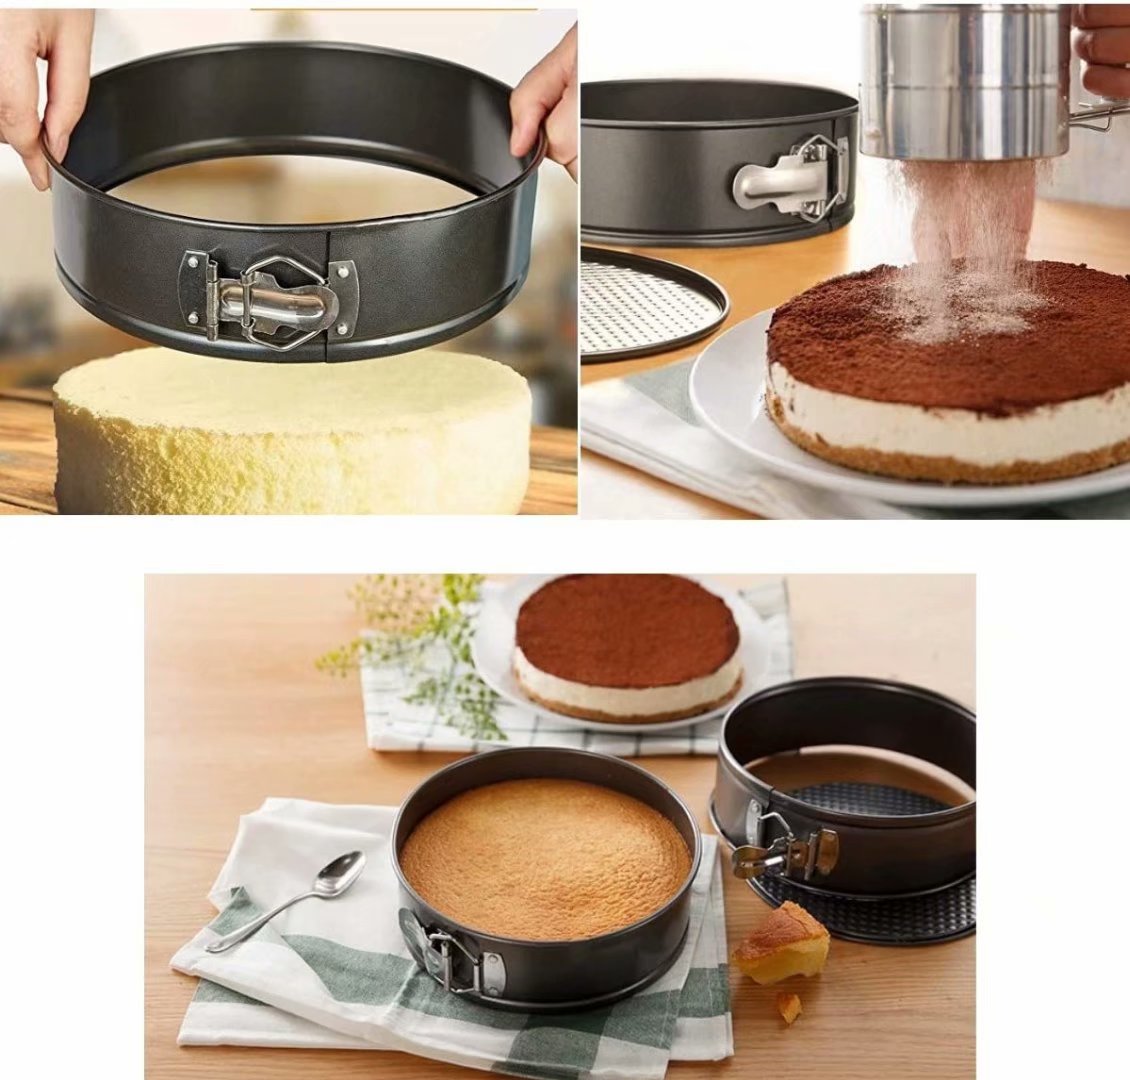 Springform Cake Tin,Round Cheesecake Pan,Cake Pan Set Round,Non-Stick Leakproof Round Springform,Cake Tins Set of 3,Cake Tin Set,Non-Stick Cake Pan,Cheesecake Pan,with Removable Bottom (3 pcs) - image 4 of 7